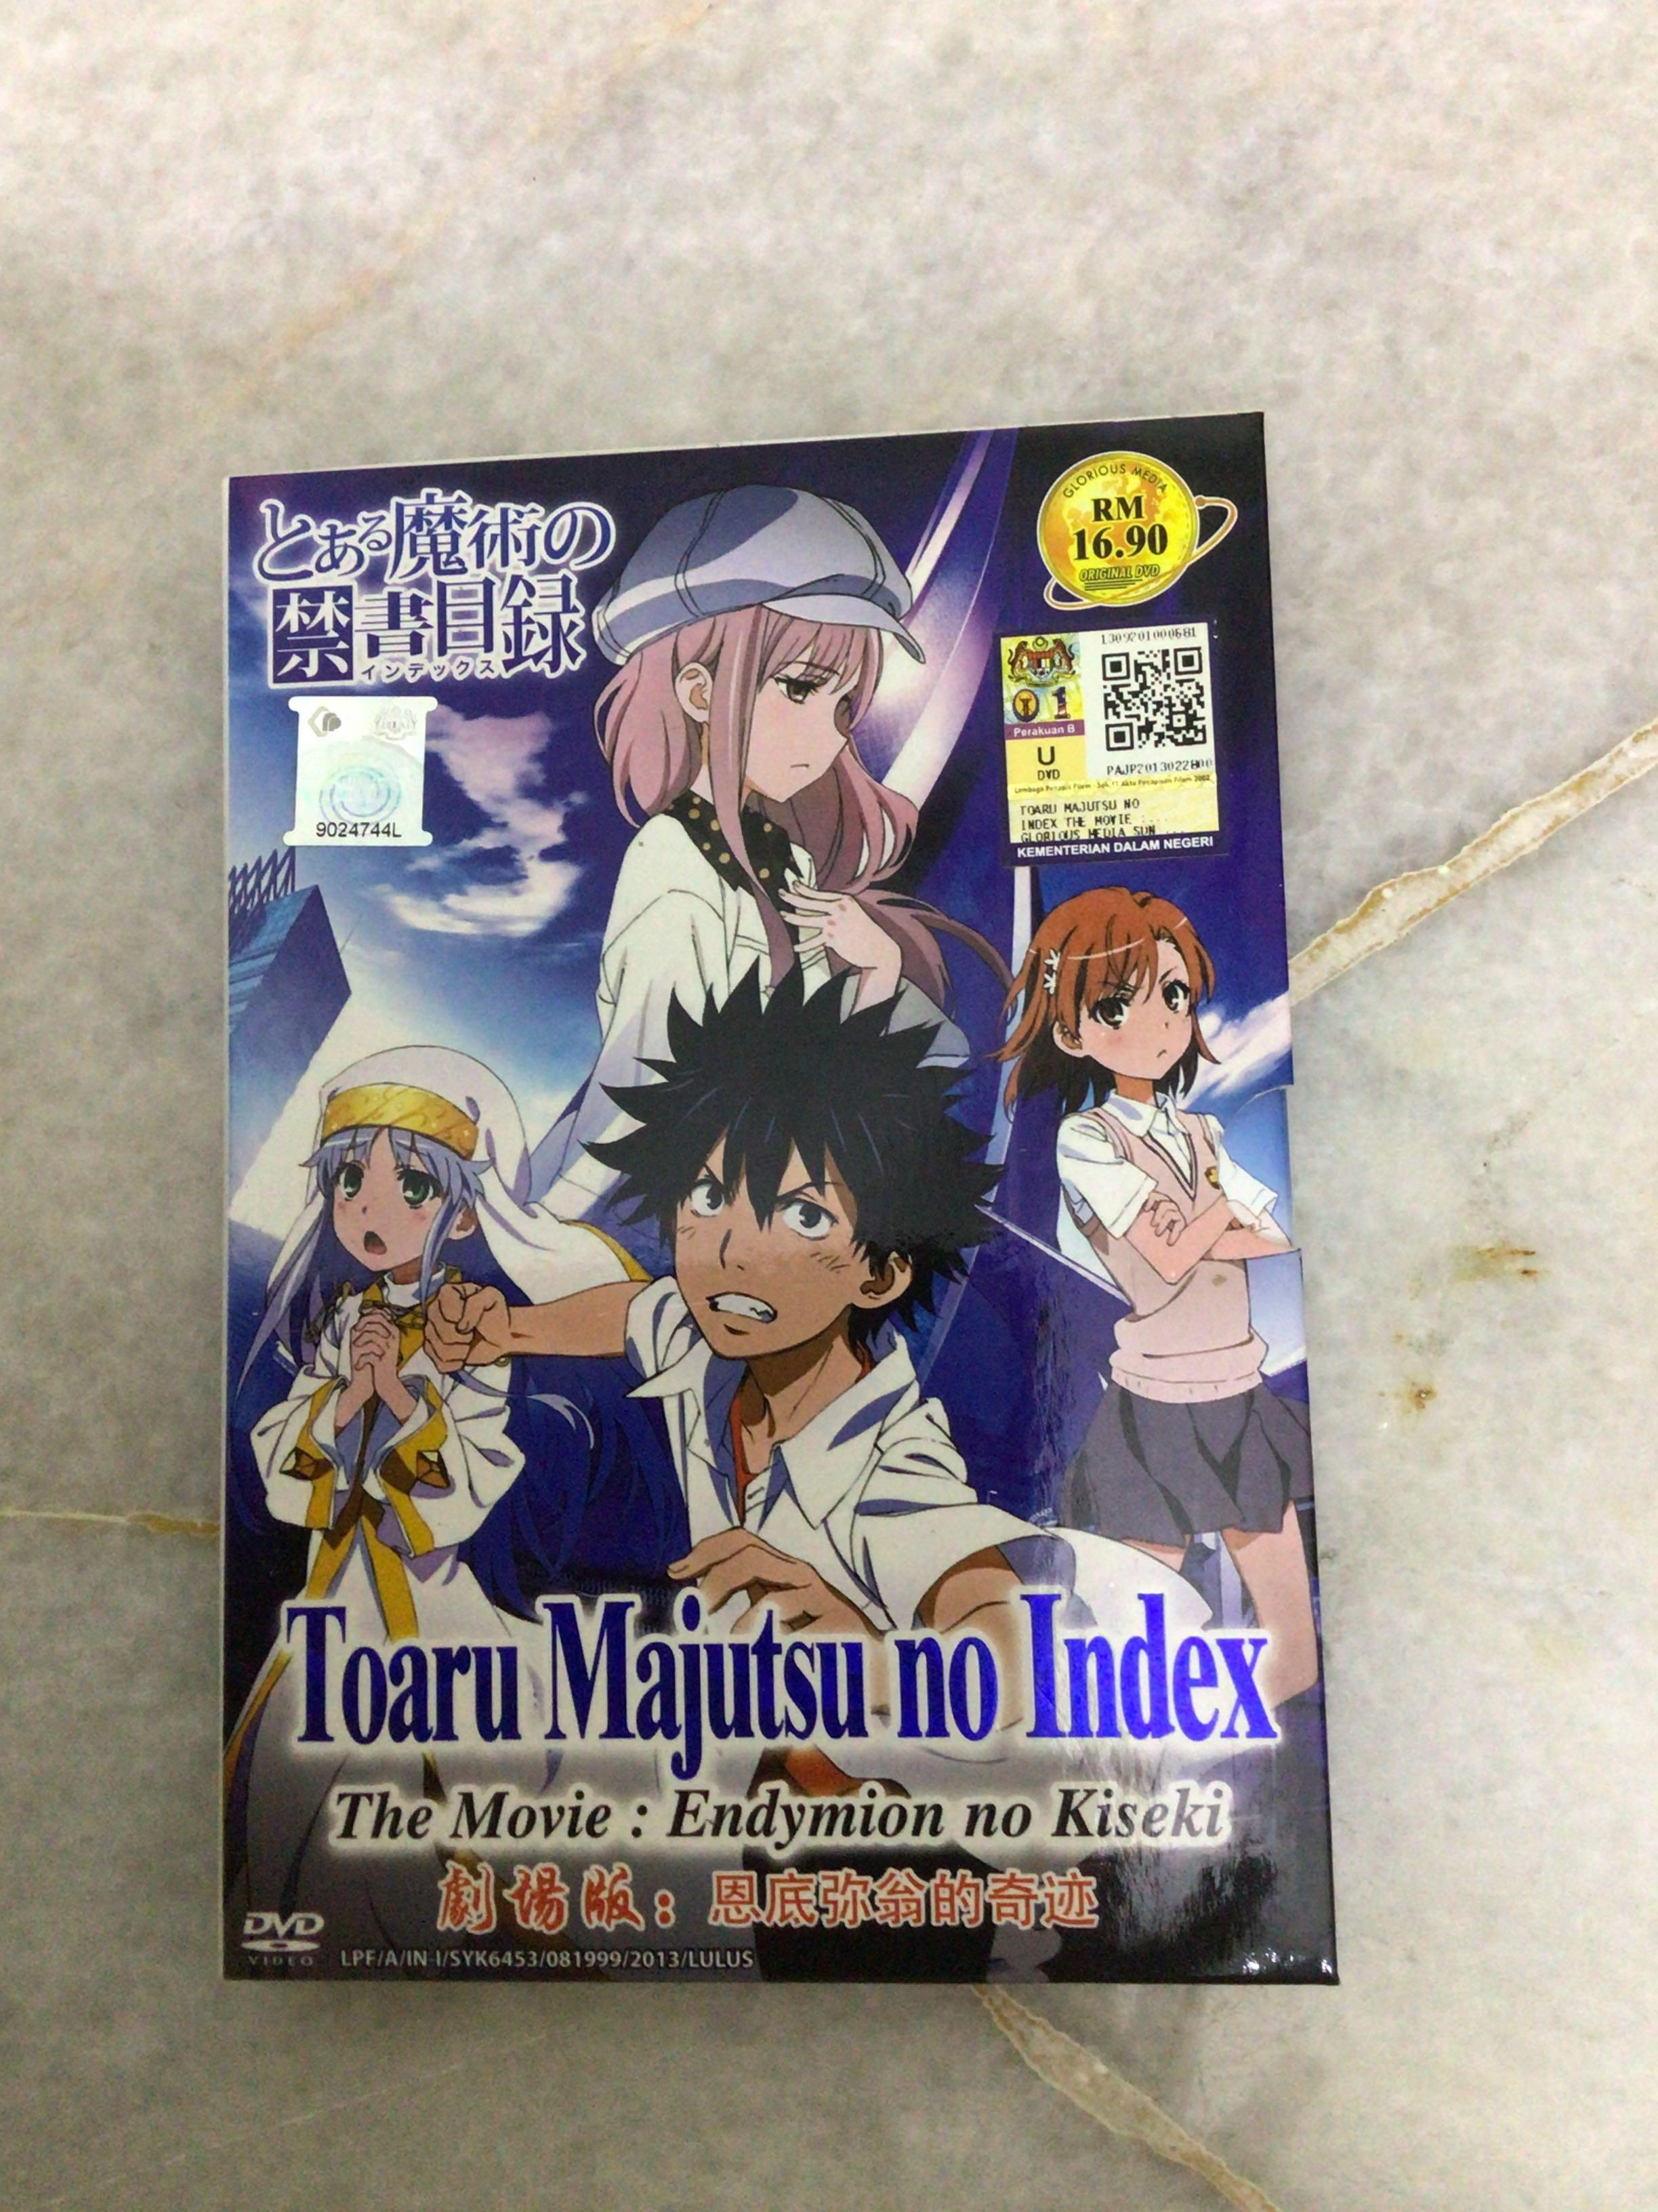 Anime DVD Toaru Majutsu no Index 魔法禁书目录, Hobbies & Toys, Music & Media, CDs  & DVDs on Carousell